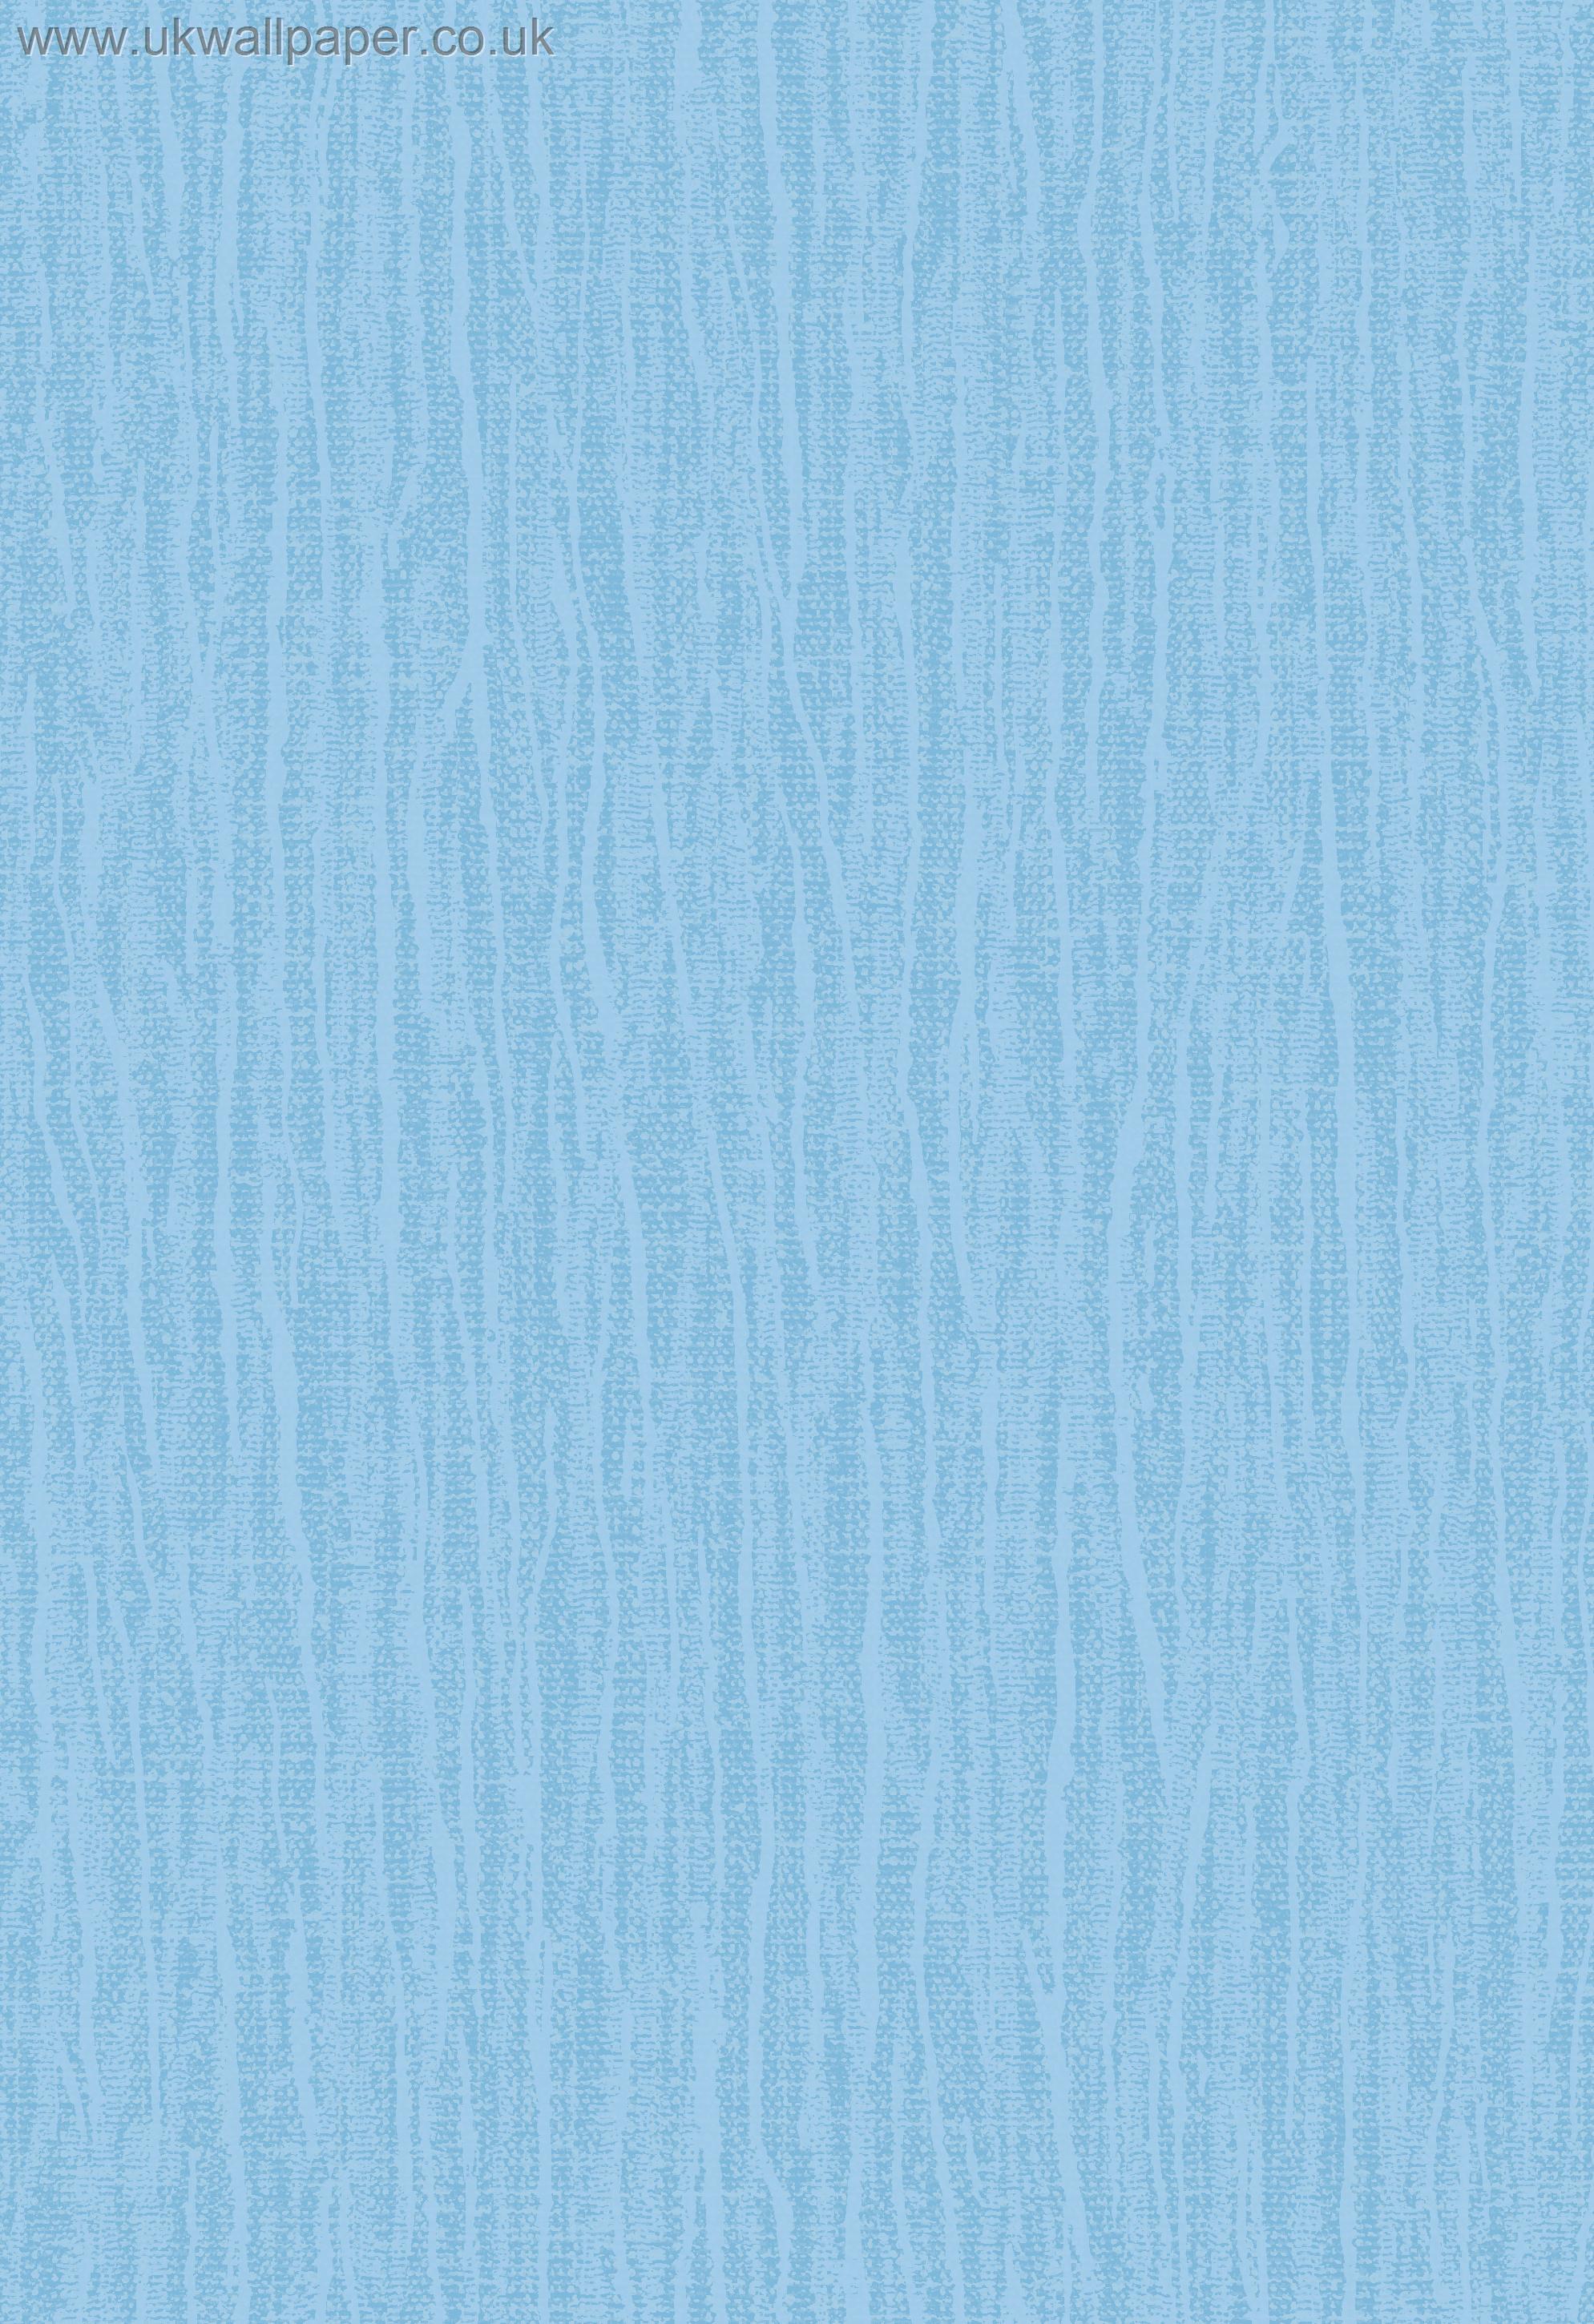 Plain Blue Wallpaper For Walls Home & Interior Design